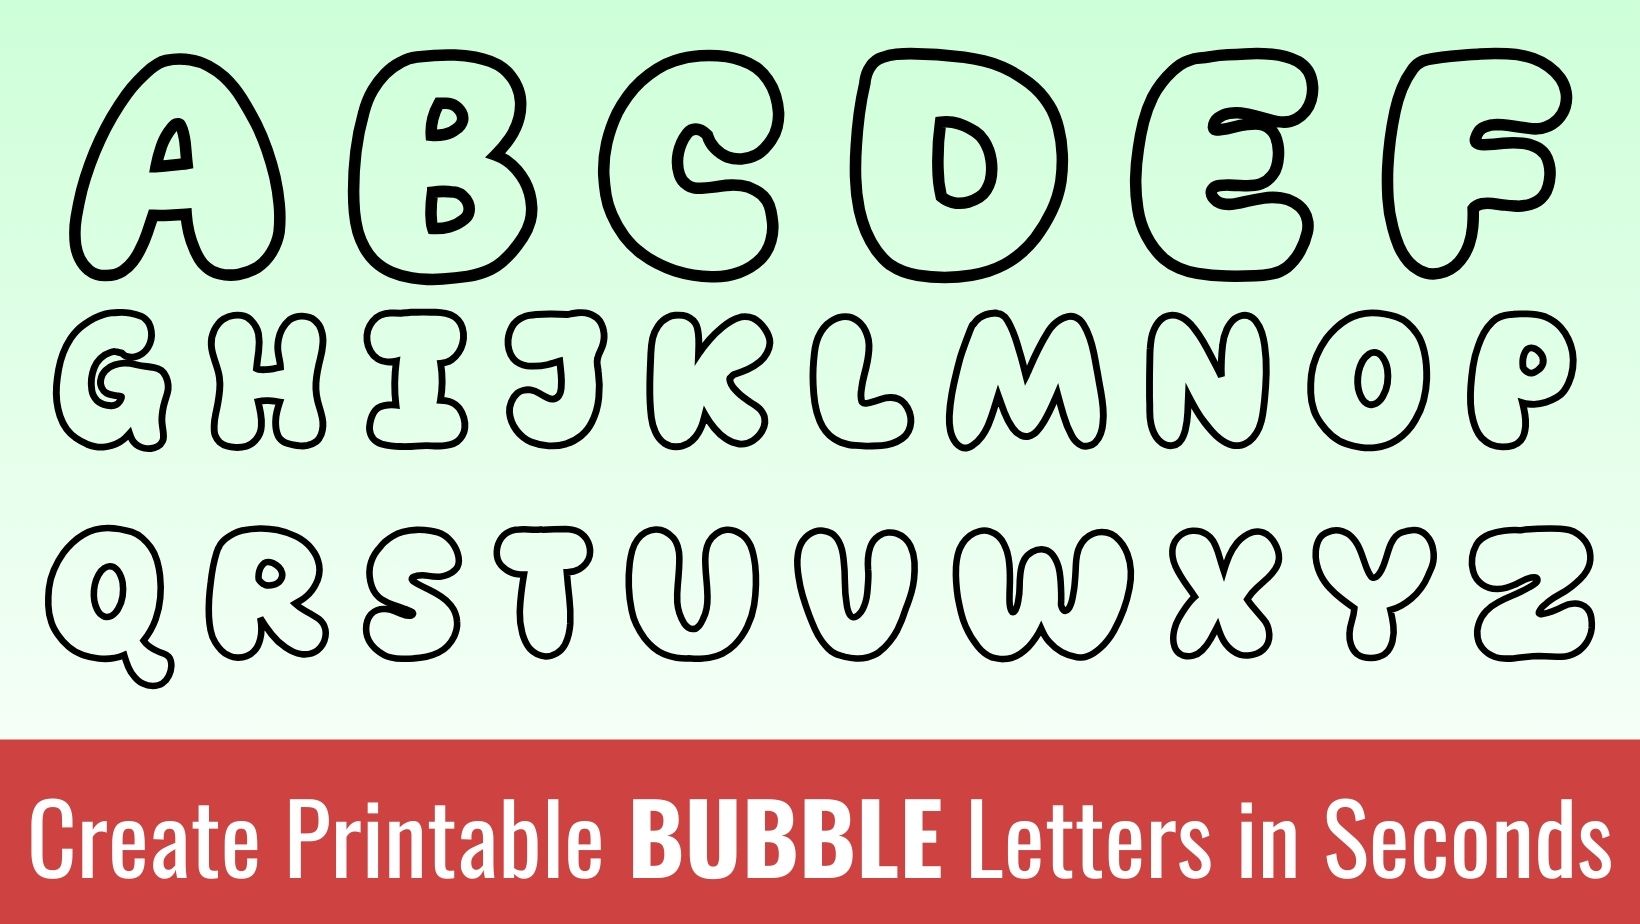 Printable bubble Letters: Free Alphabet Font and Letter Templates